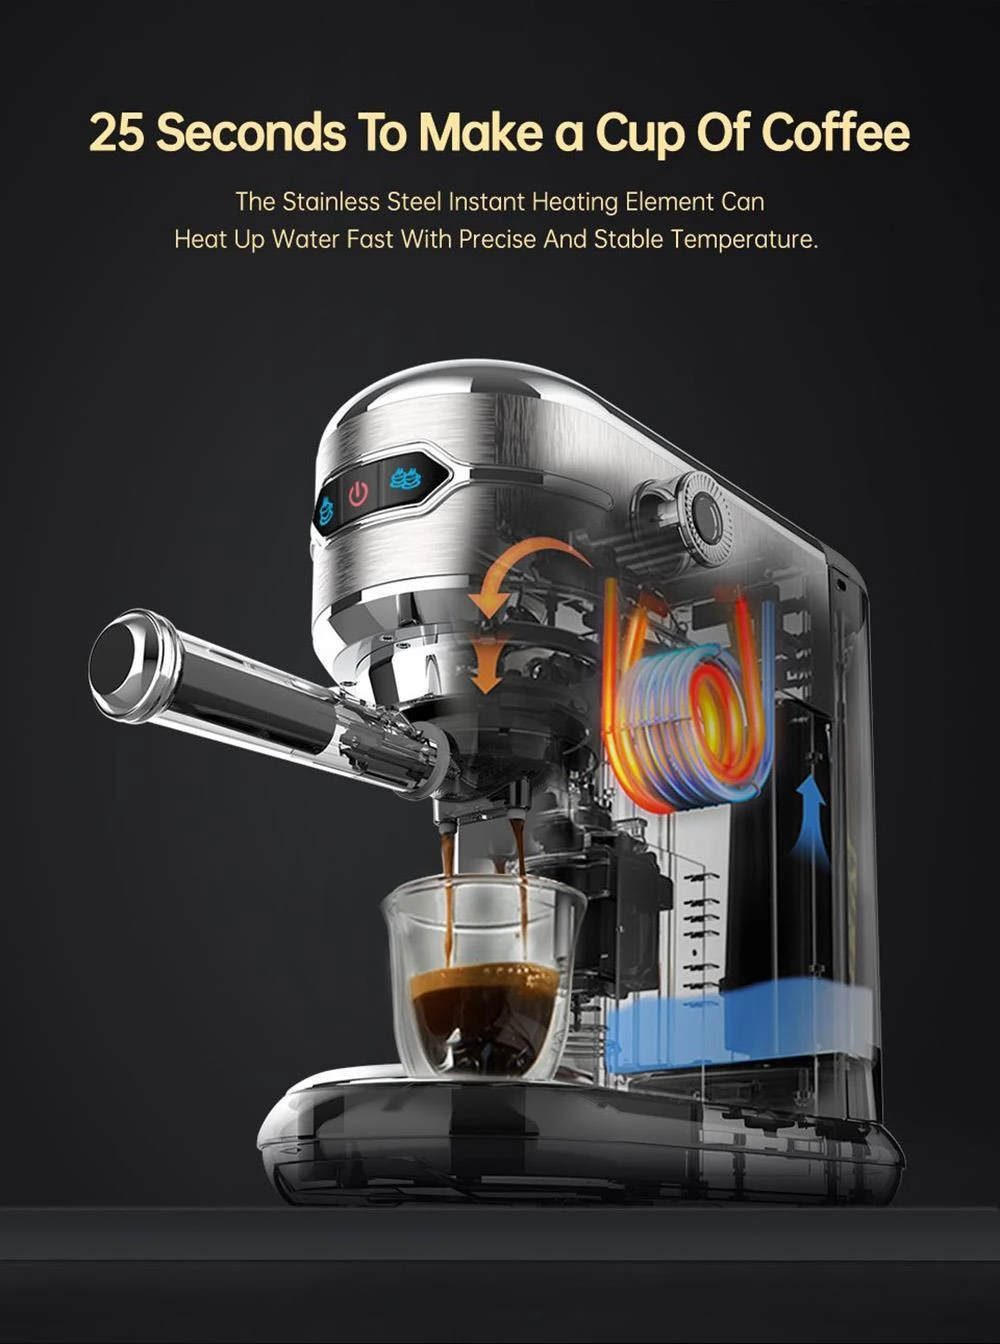 HiBREW H11 1450W Coffee Maker, 19 Bar High Pressure, ESE POD & Powder Dual Use, Strong Steam Foaming System